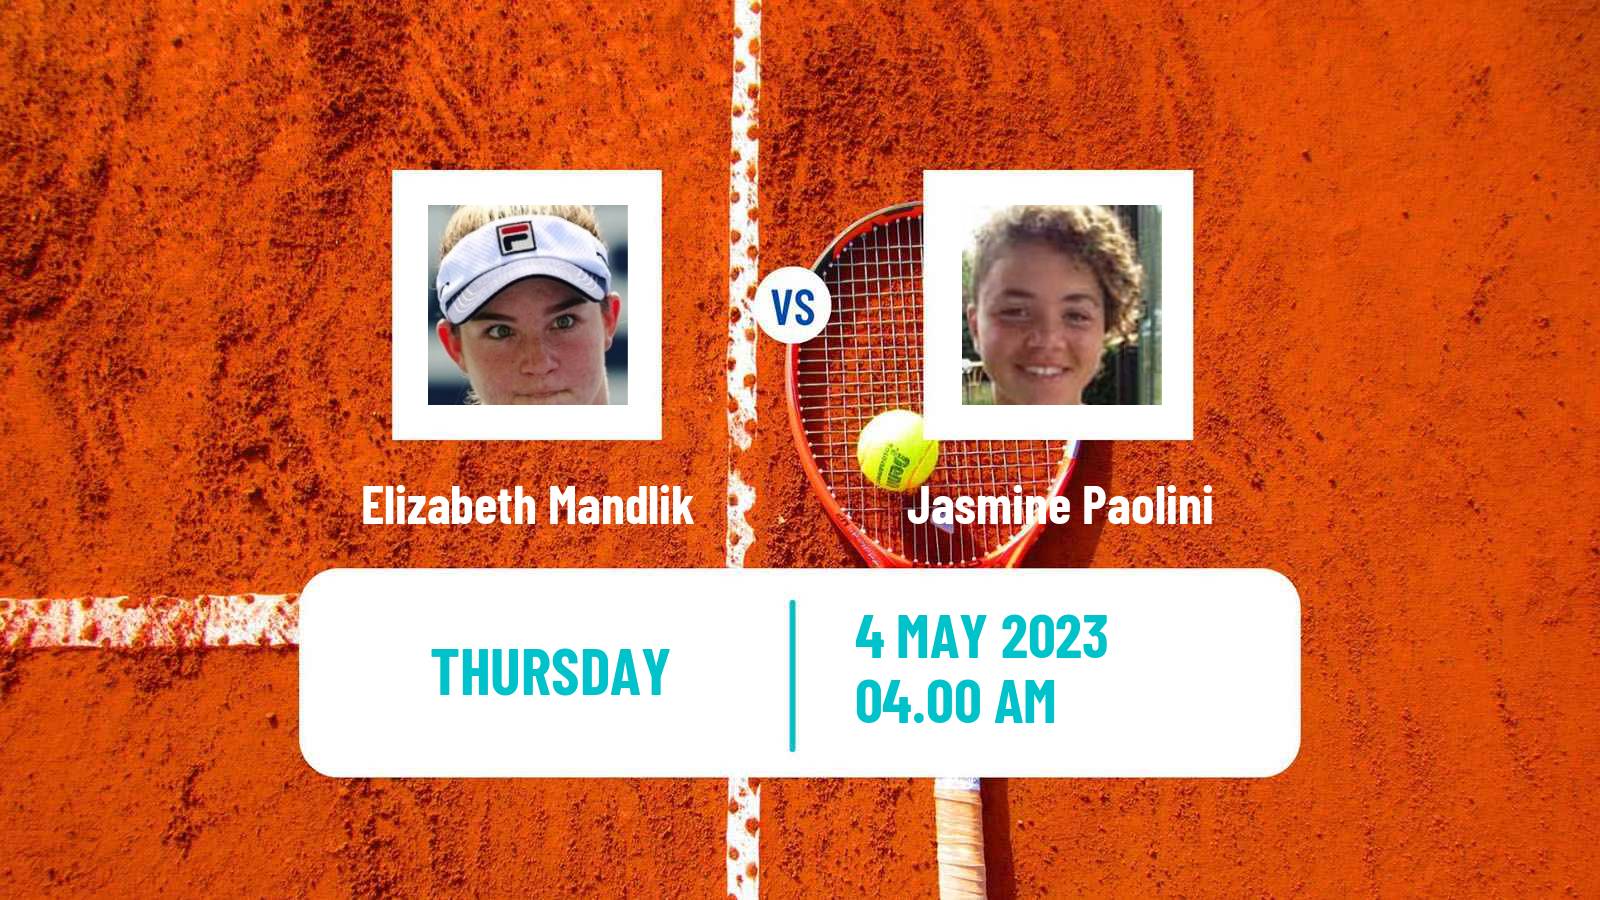 Tennis ATP Challenger Elizabeth Mandlik - Jasmine Paolini